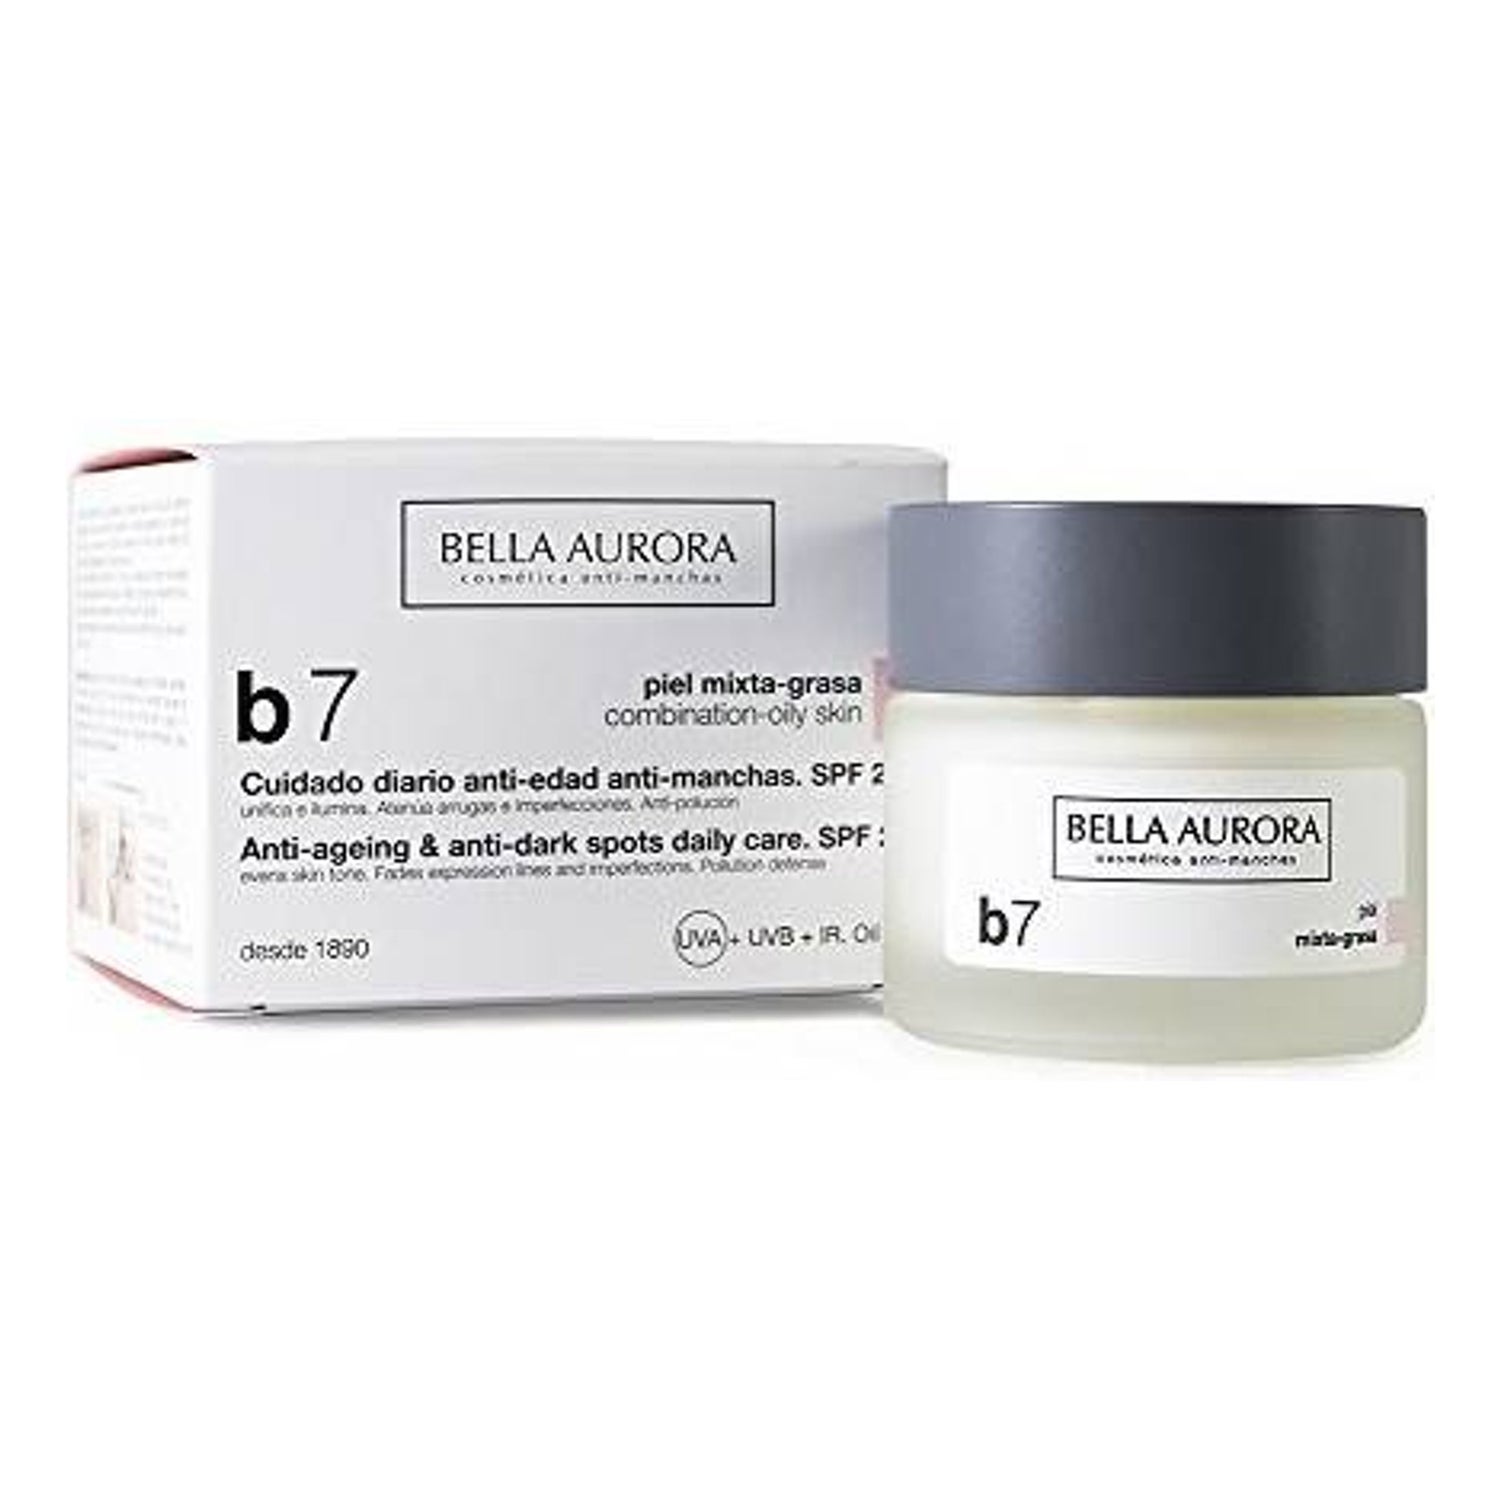 Compra Bella Aurora B7 crema de noche